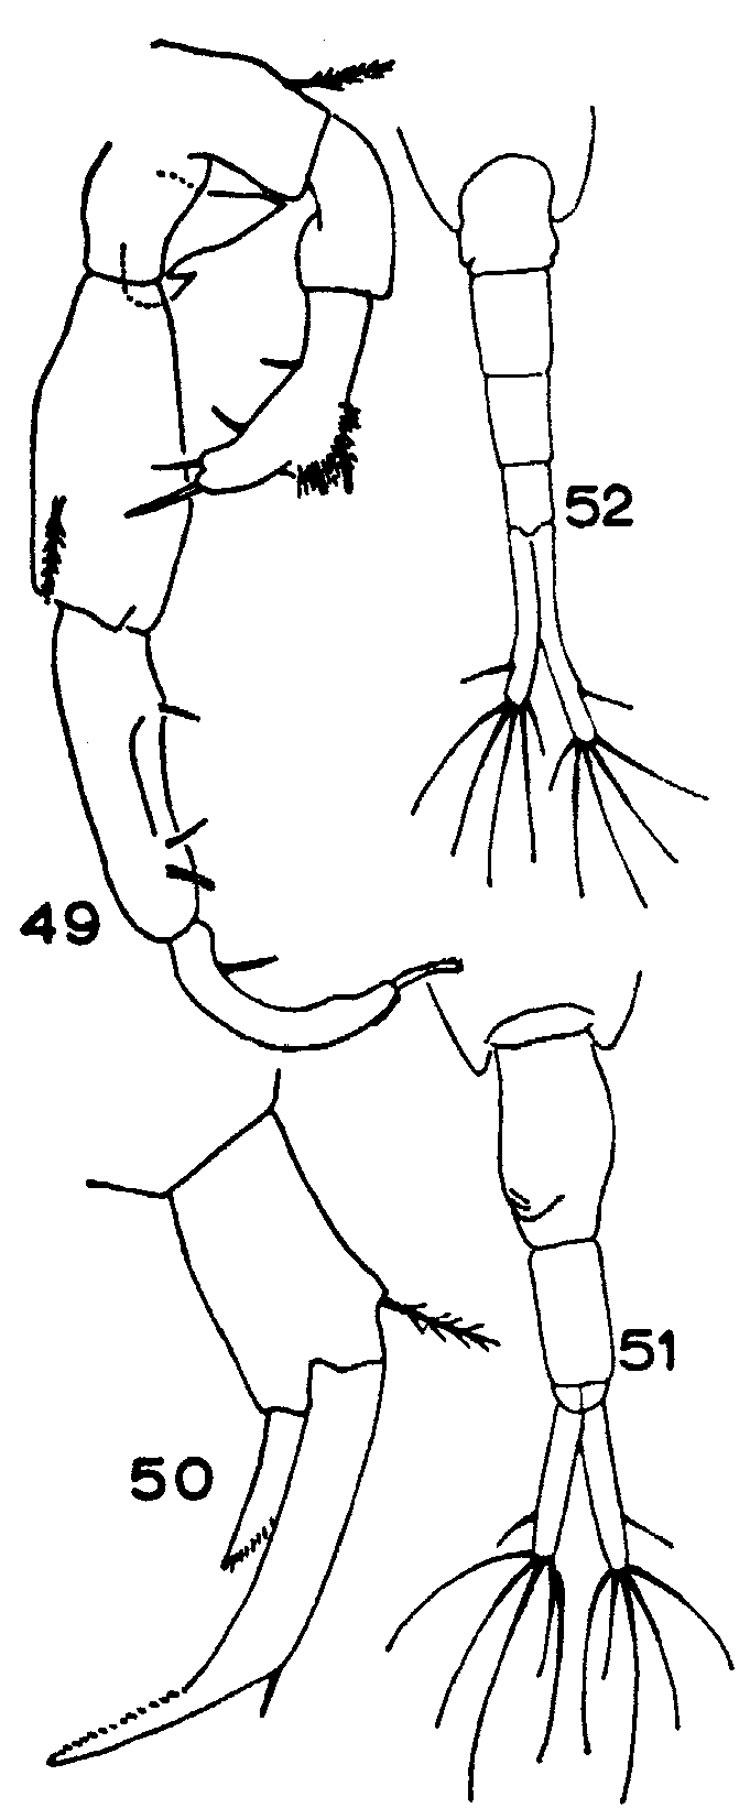 Species Acartiella sewelli - Plate 1 of morphological figures